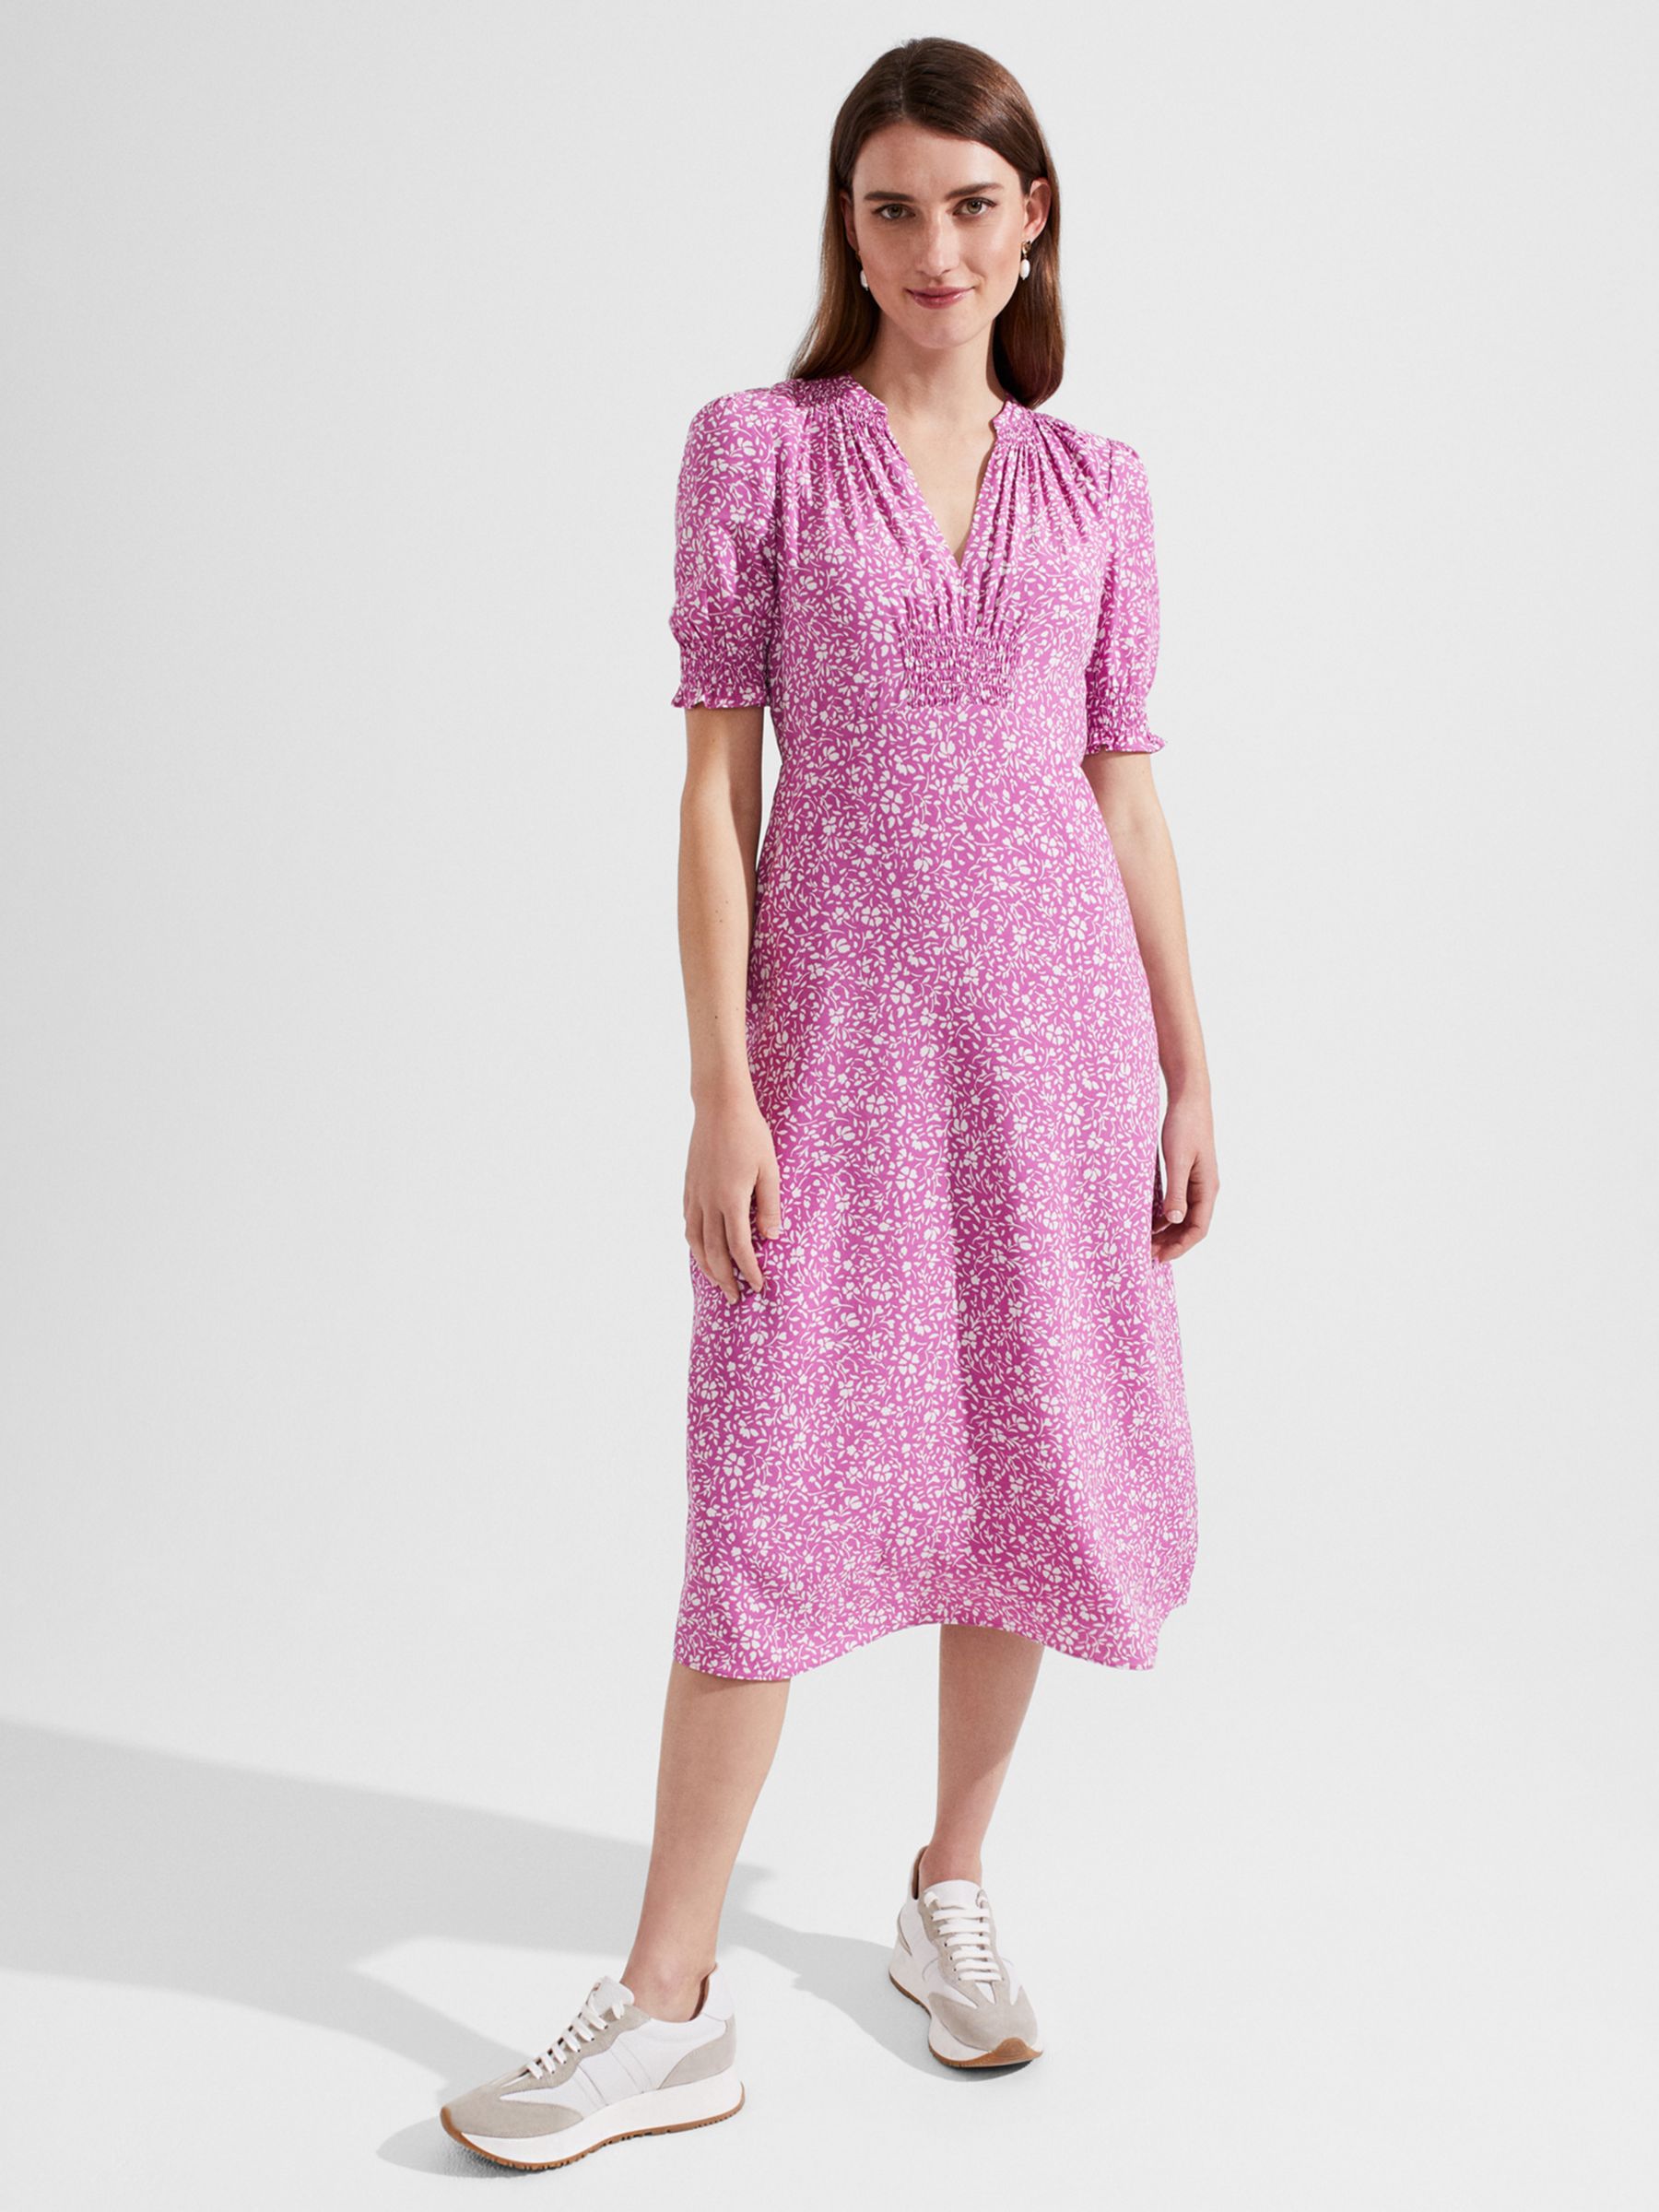 Hobbs Tullia Floral Midi Dress, Pink/Ivory at John Lewis & Partners